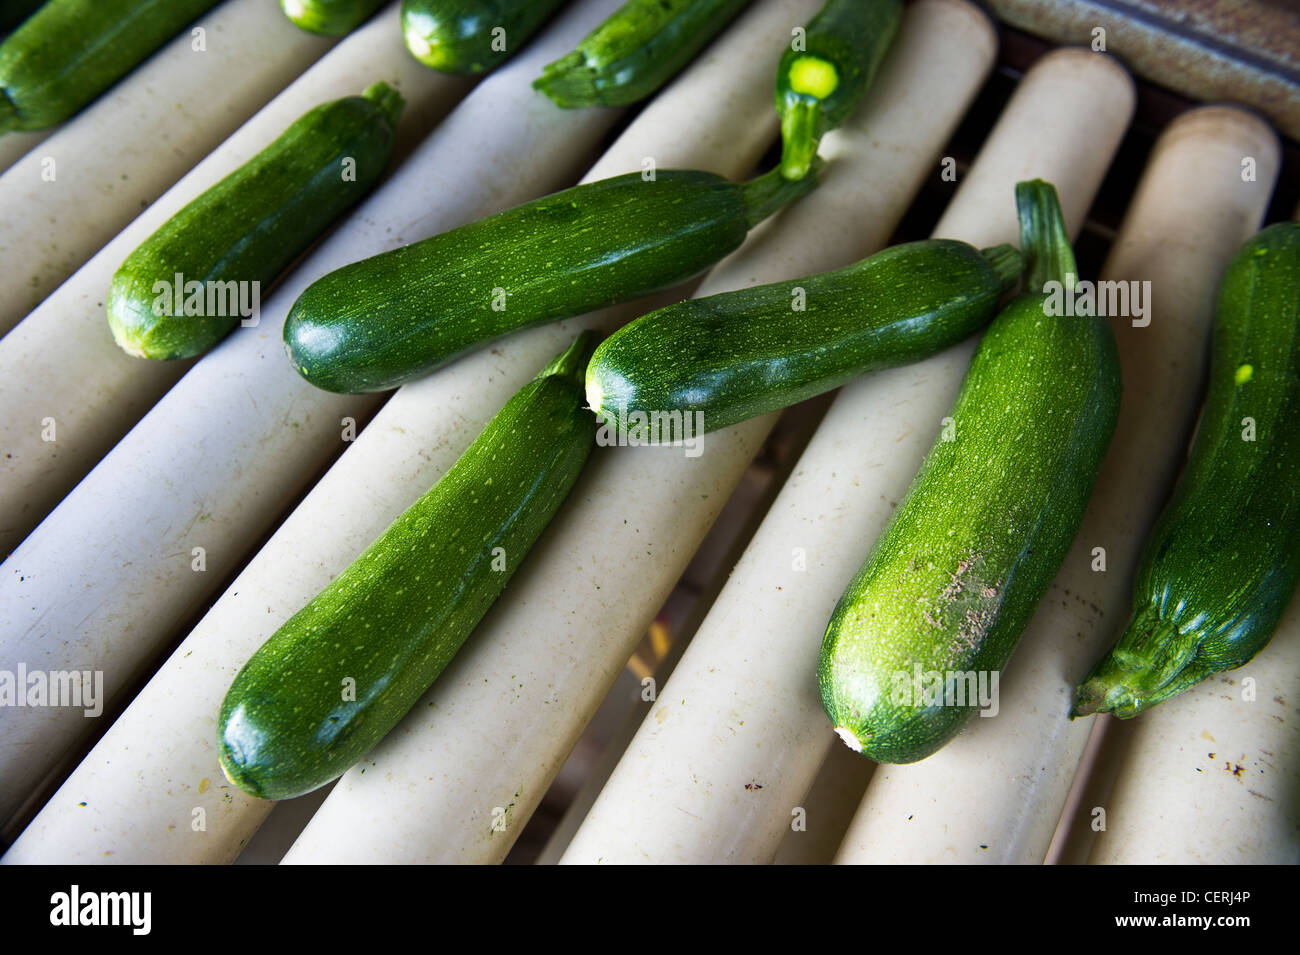 Zucchini on conveyor belt for sorting Stock Photo